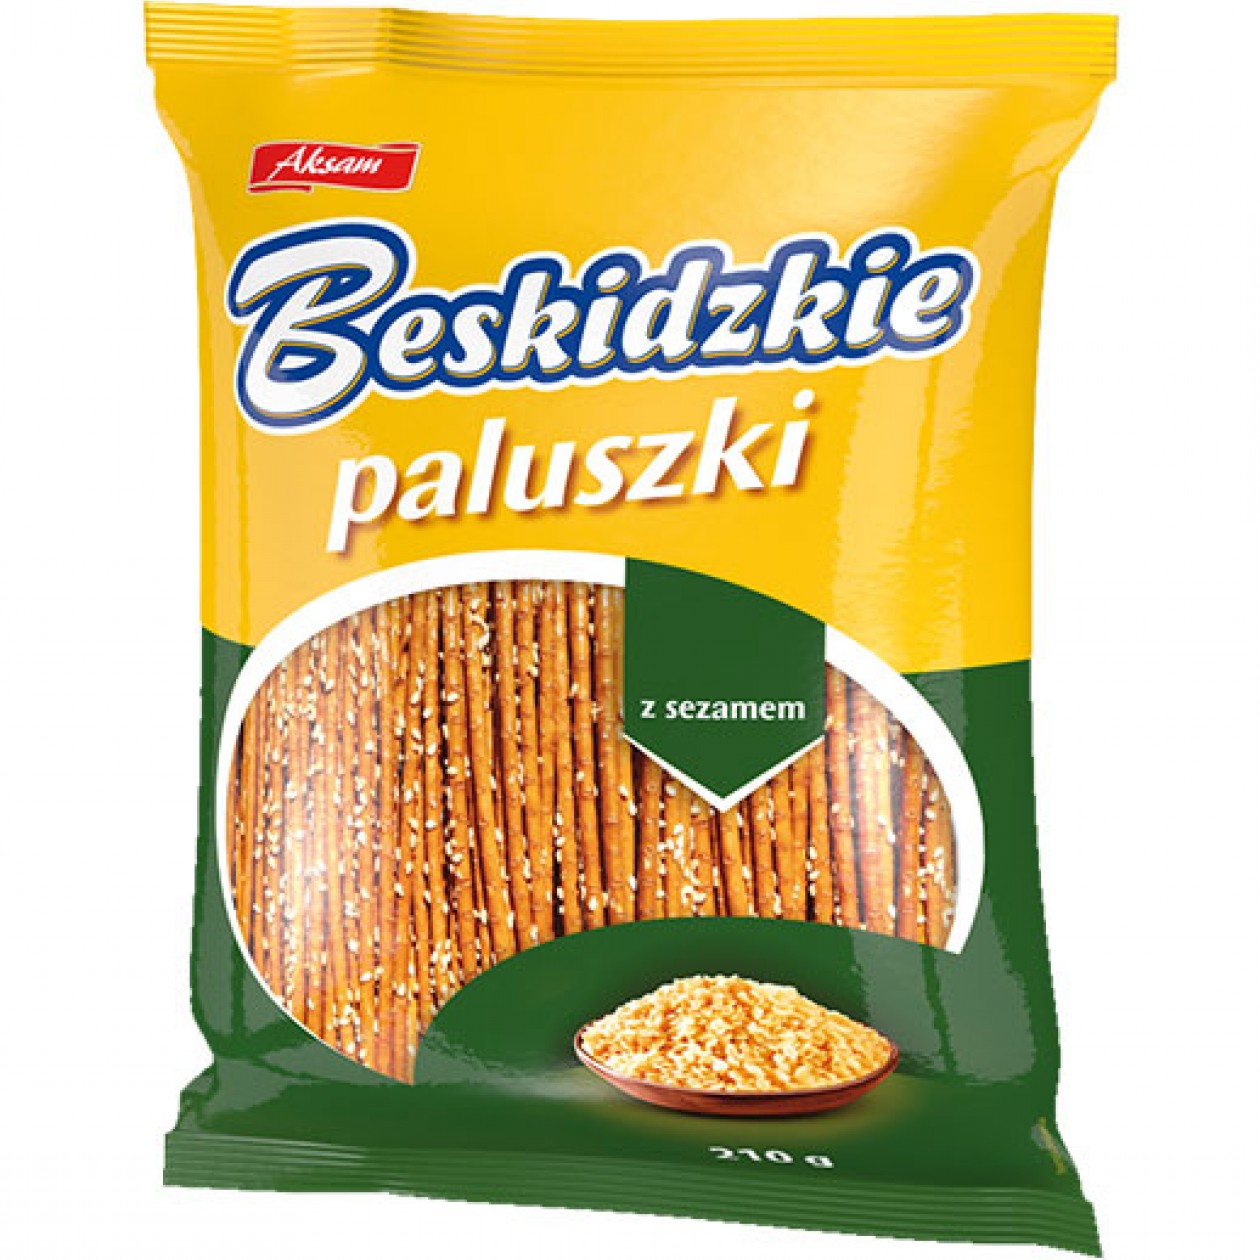 Aksam Beskidzkie Paluszki Sesame Stick (Sezam) 16x210g